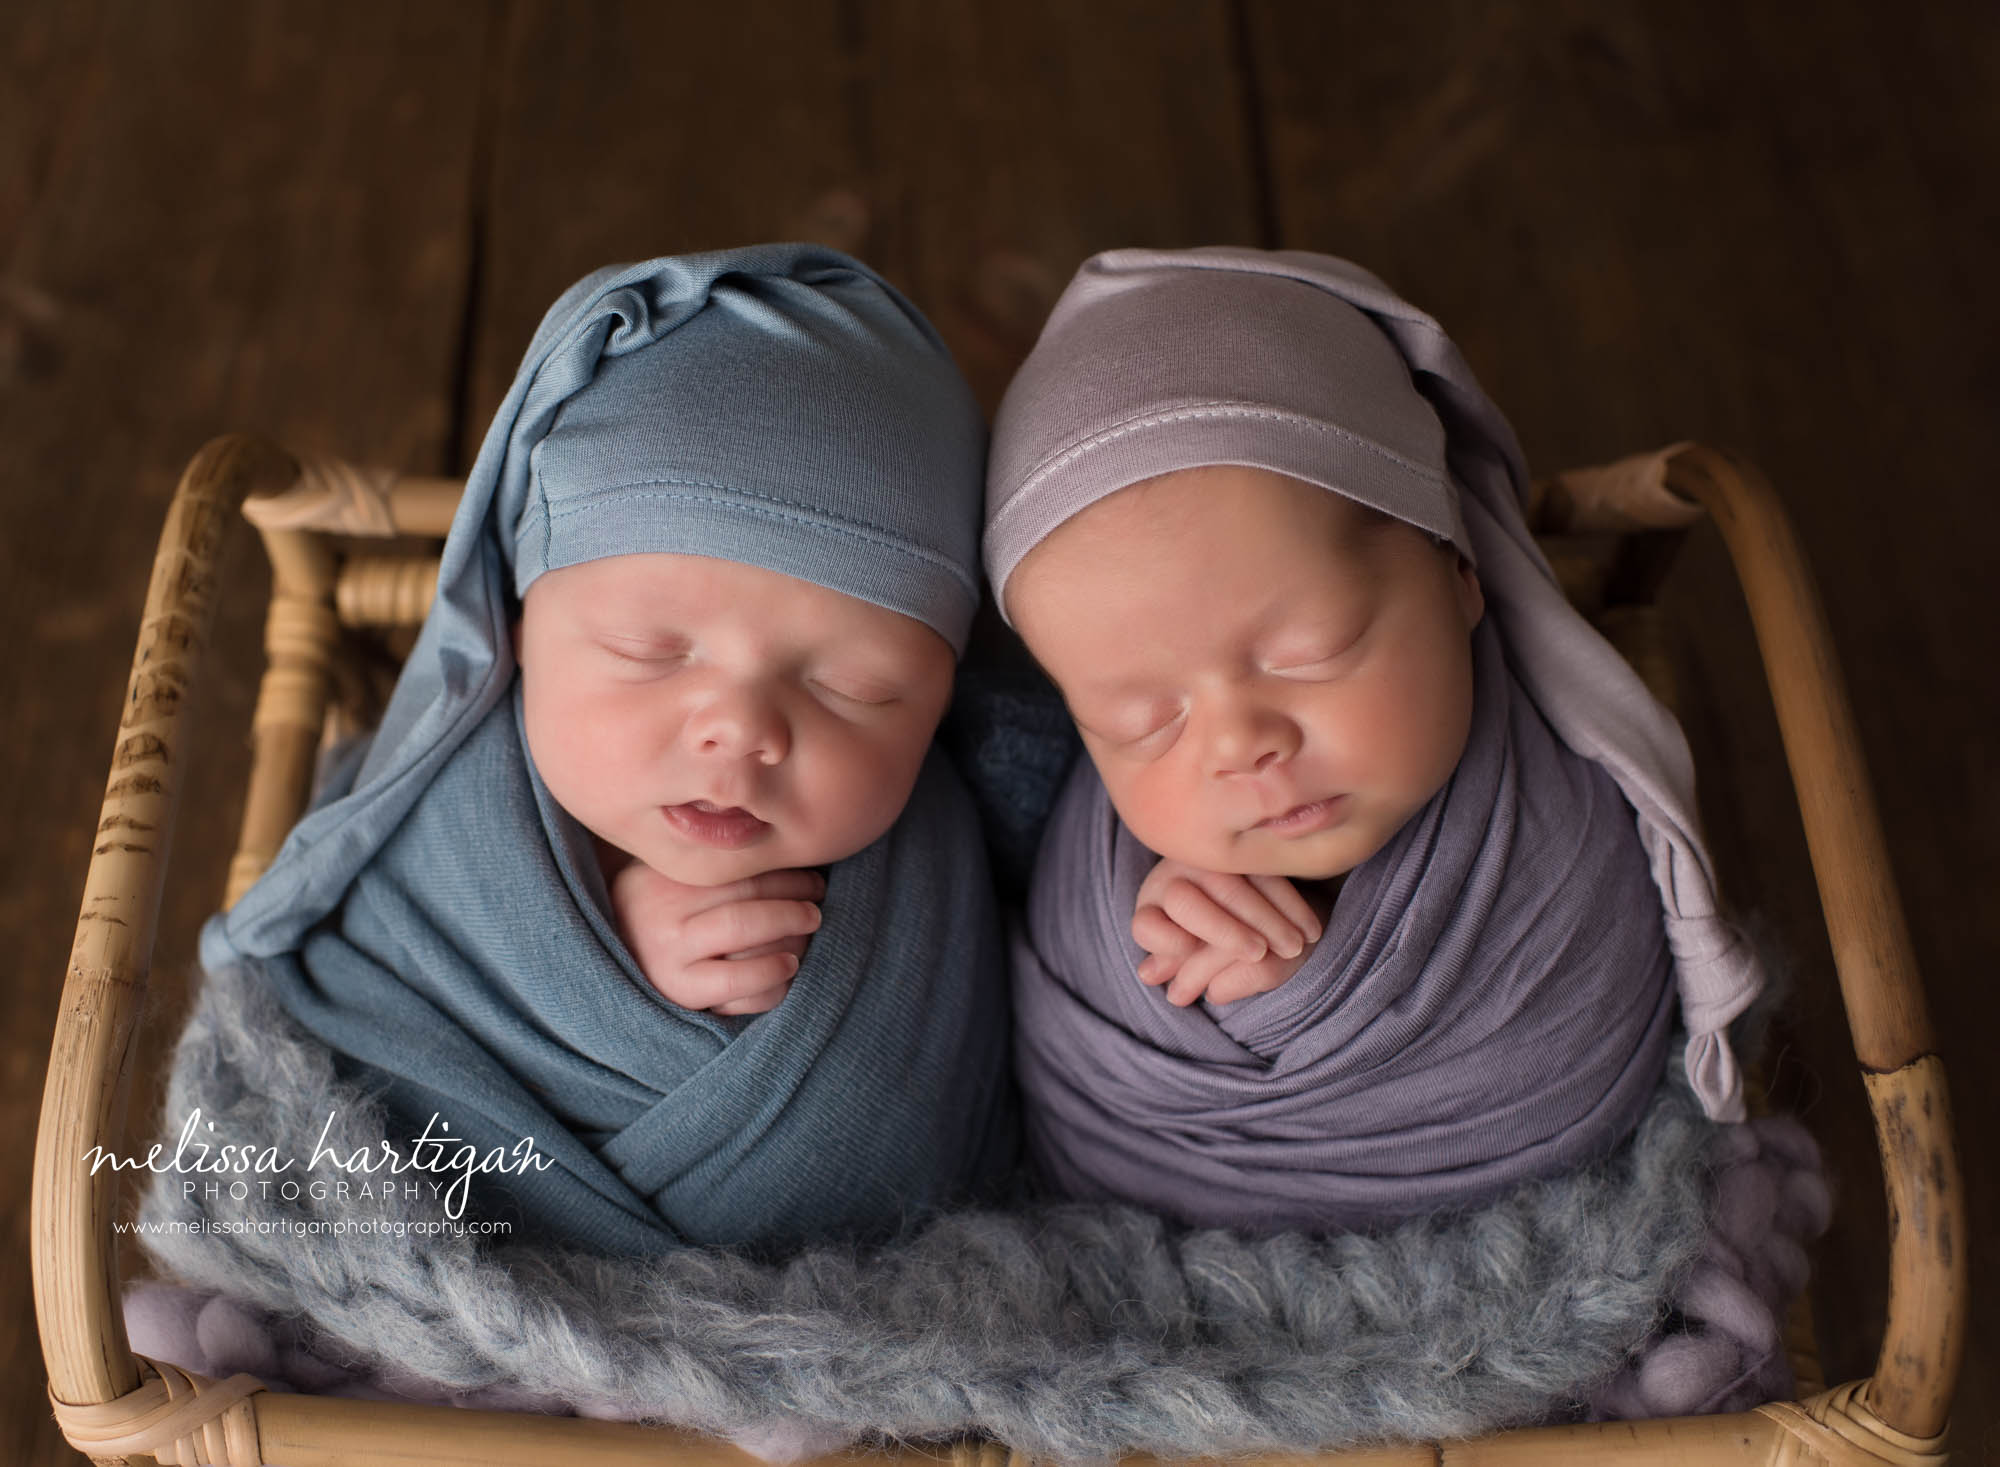 newborn babies boy girl twins posed together in basket